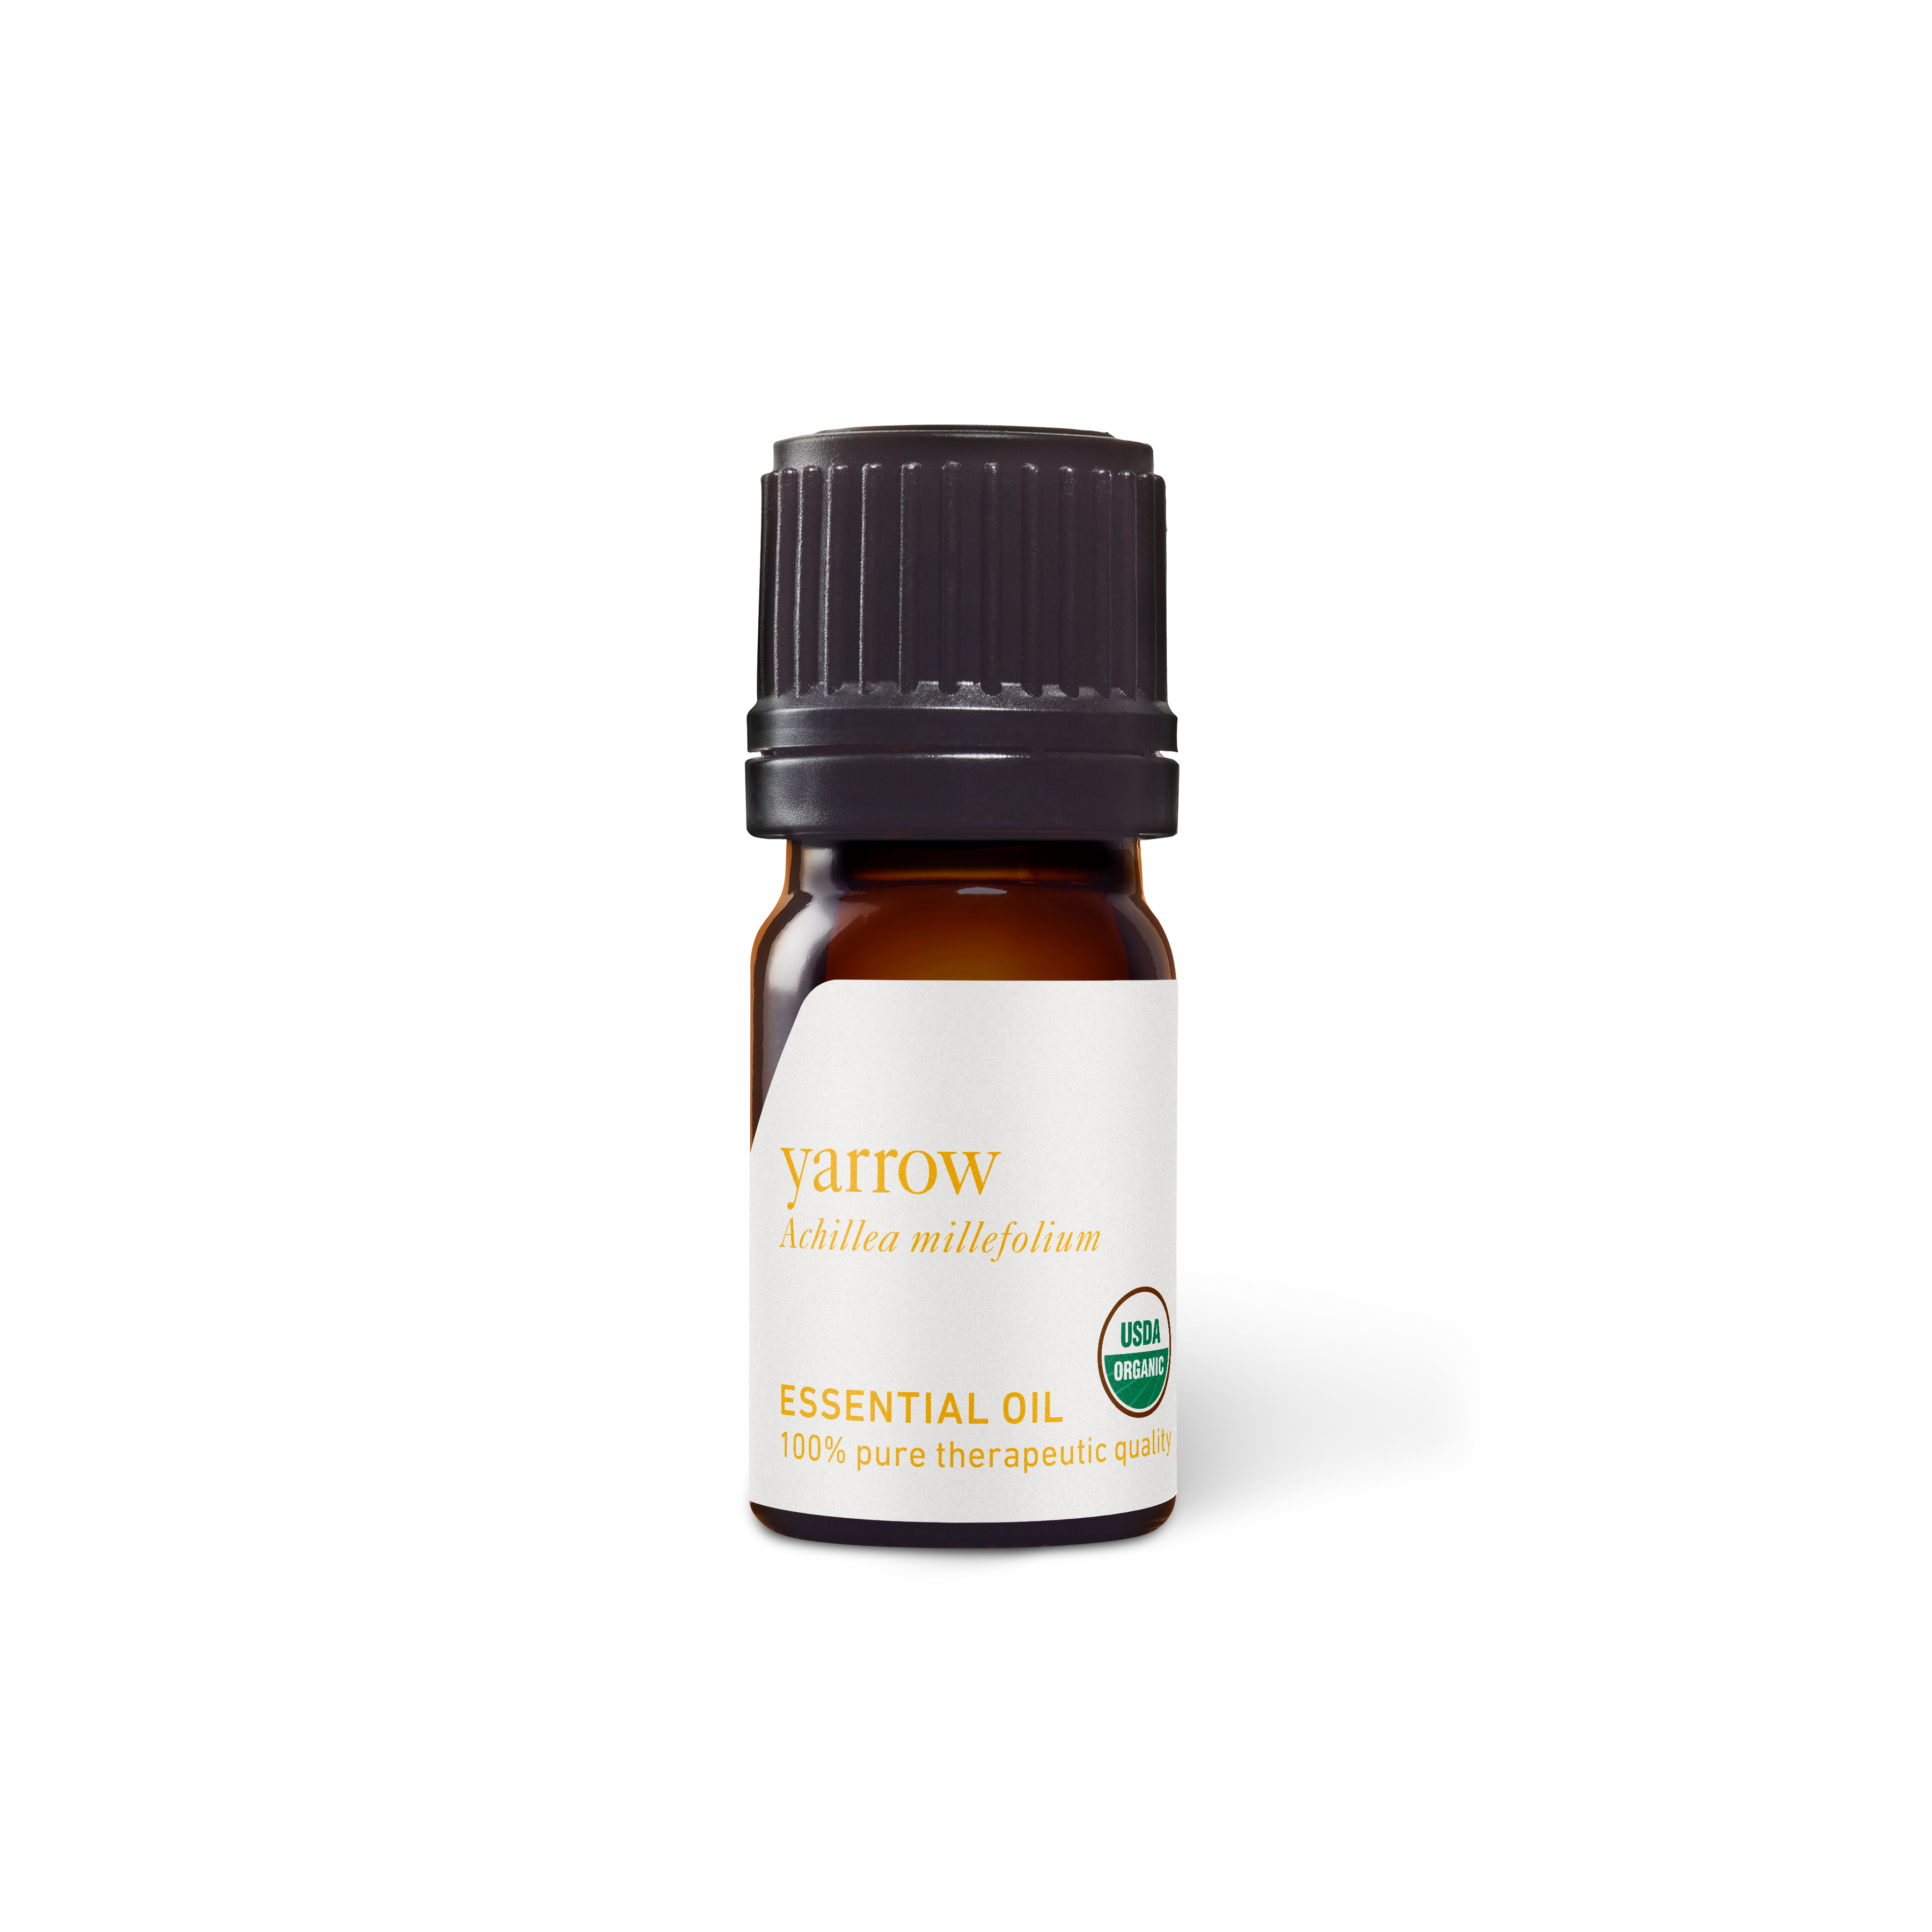 Yarrow Essential Oil, achillea millefolium from Artisan Aromatics